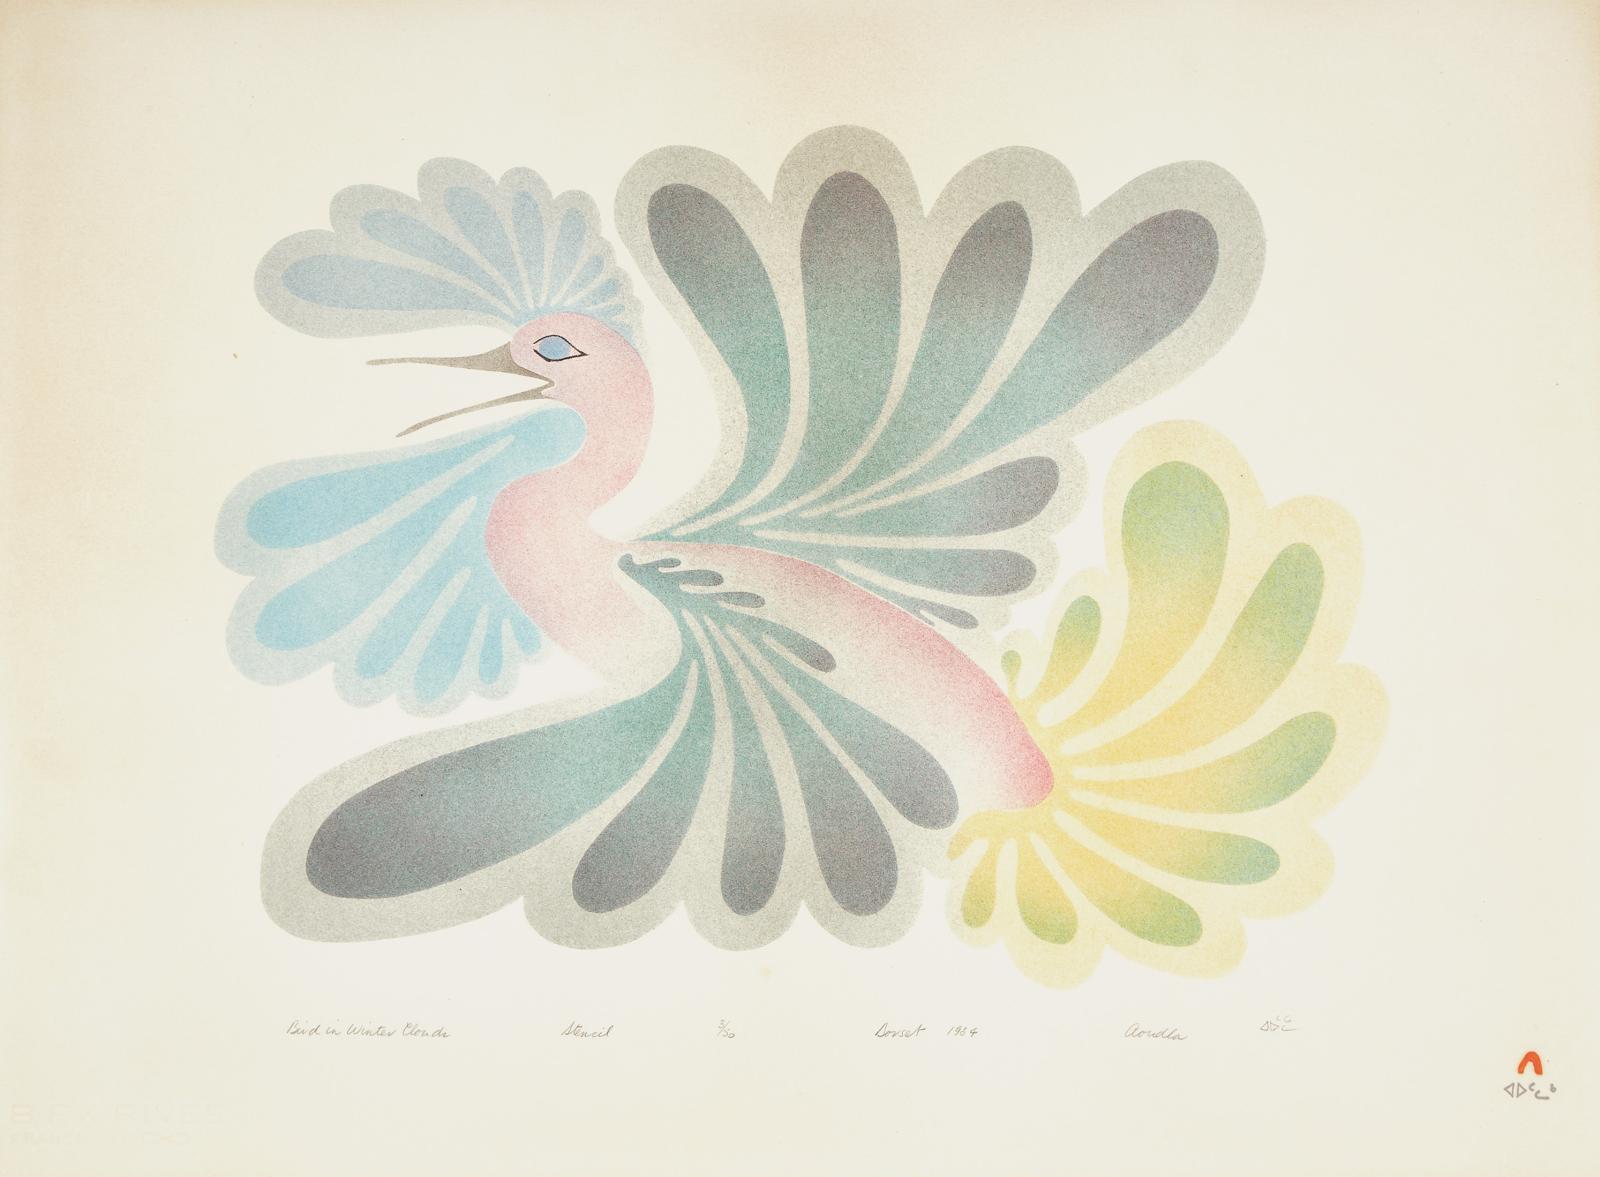 Aoudla Pudlat (1951-2006) - Bird In The Winter Clouds